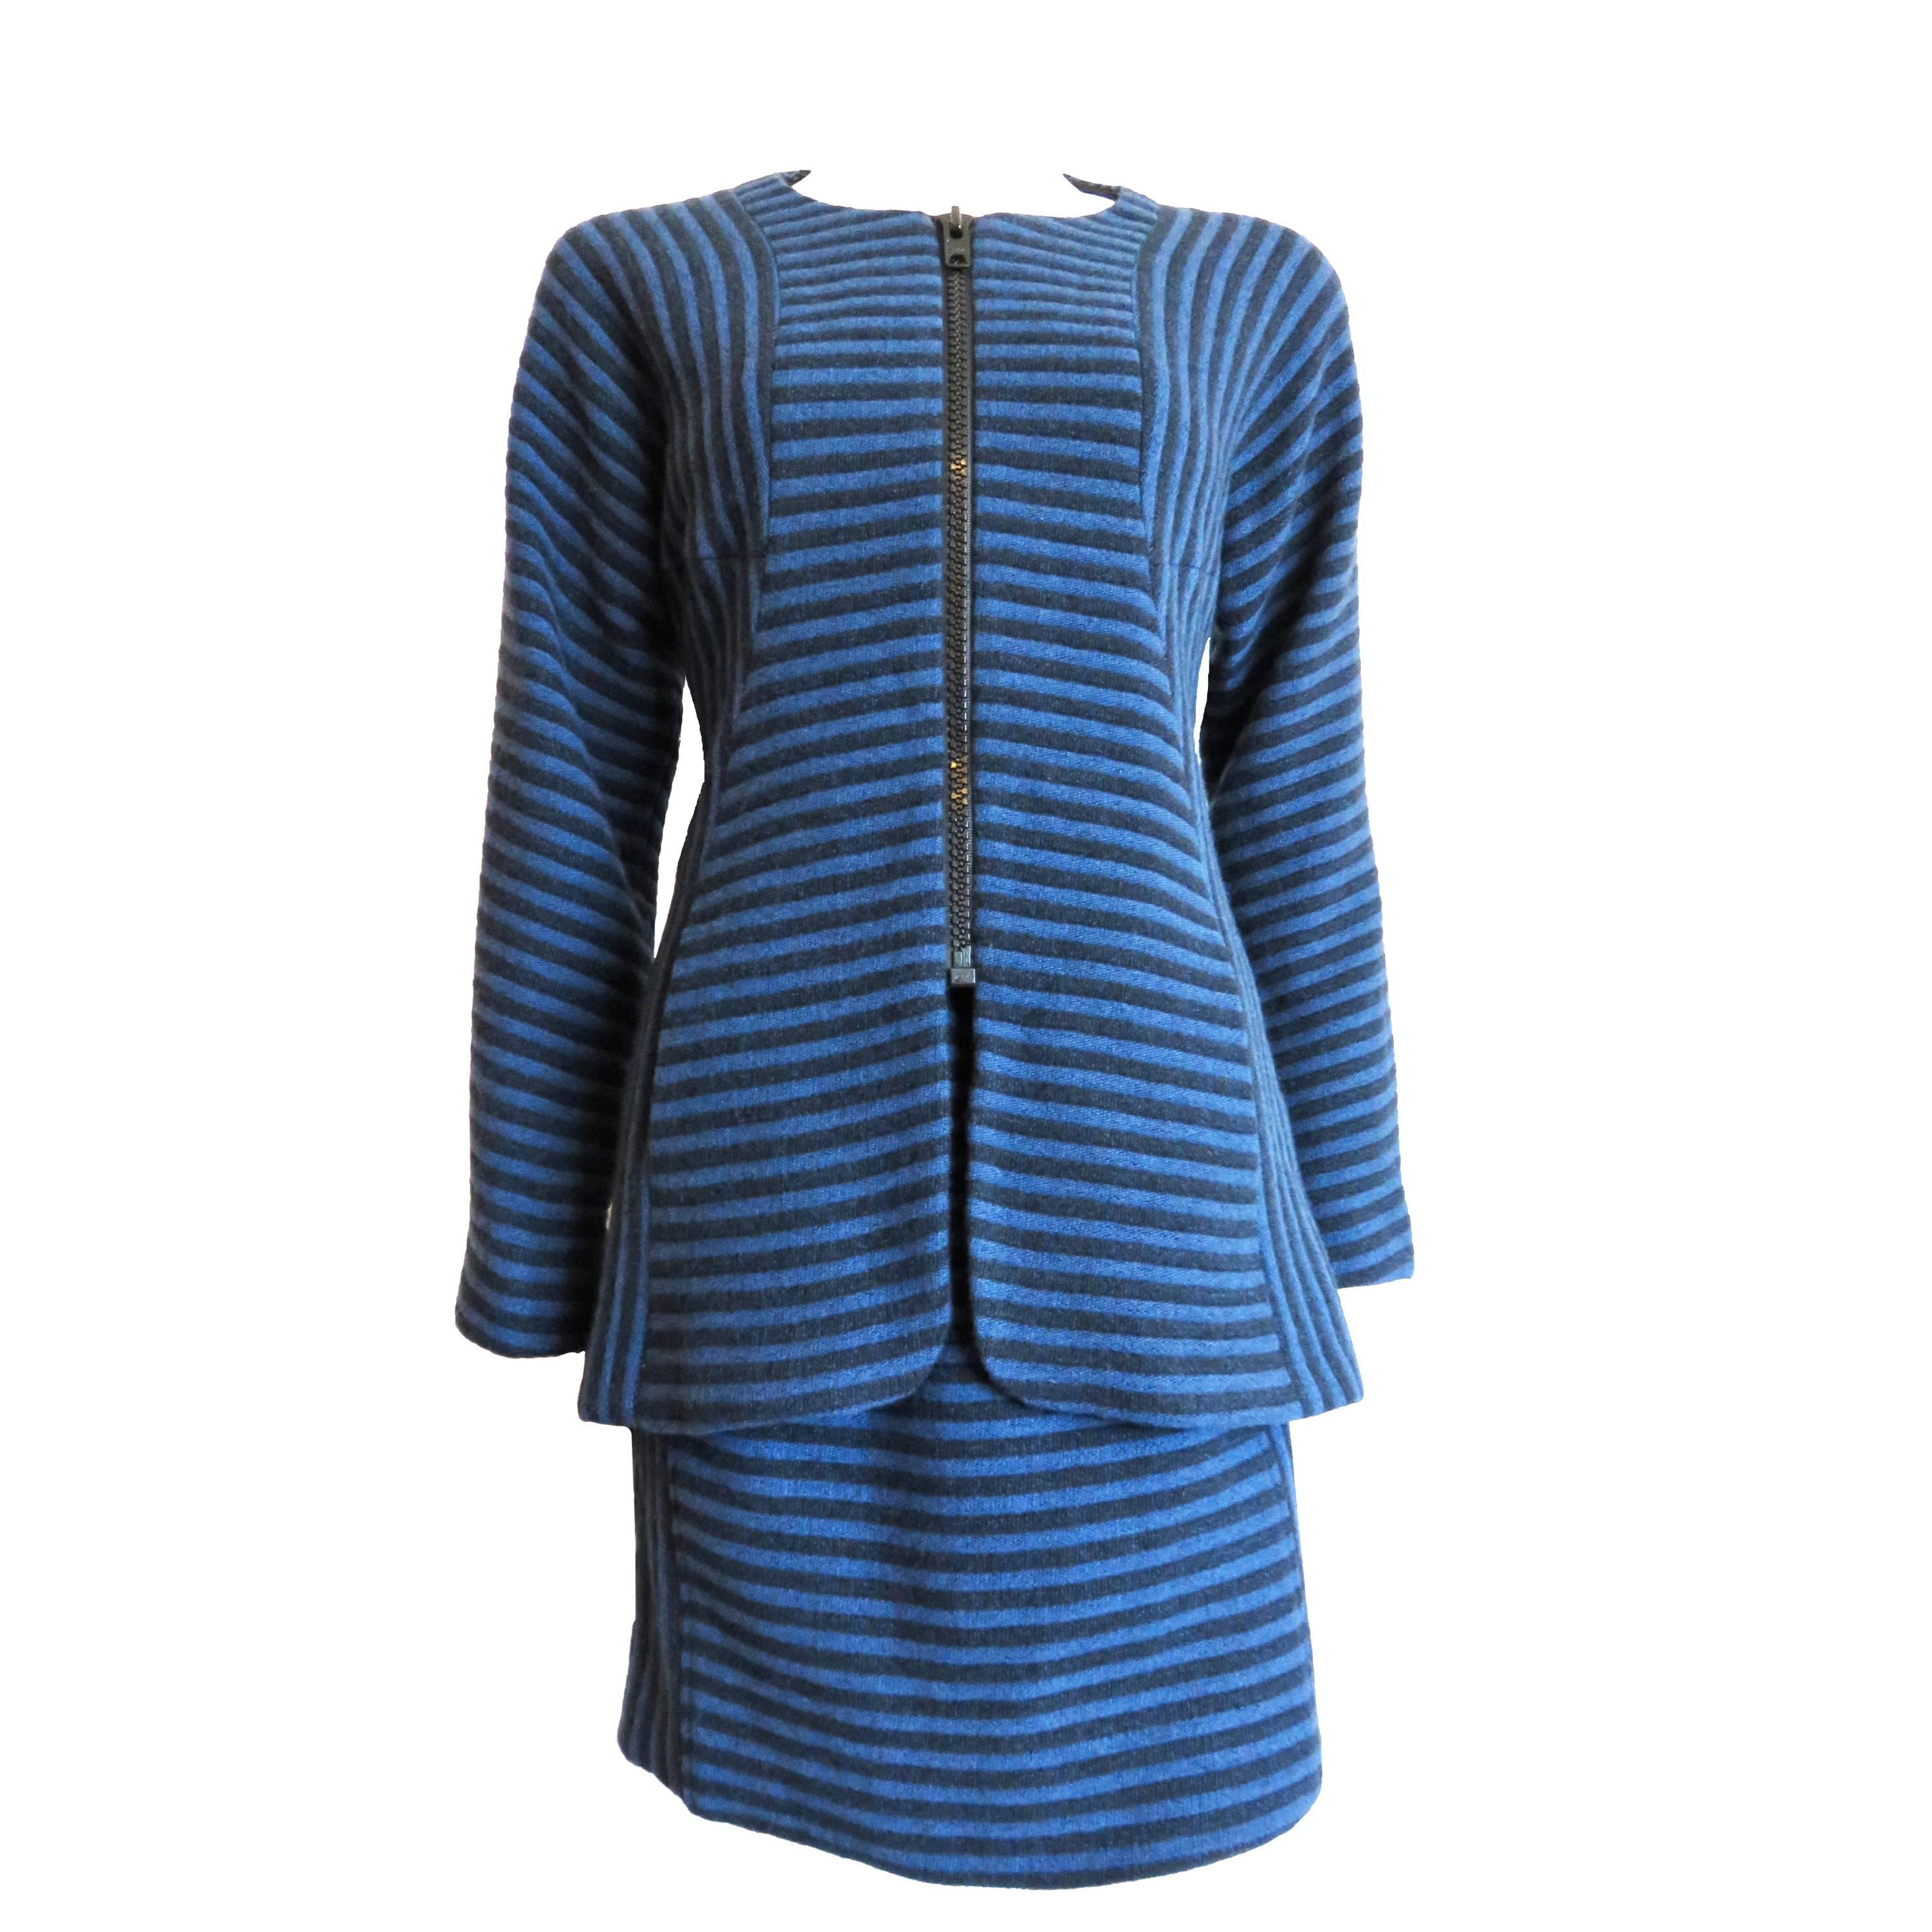 1995 GEOFFREY BEENE Striped wool skirt suit For Sale